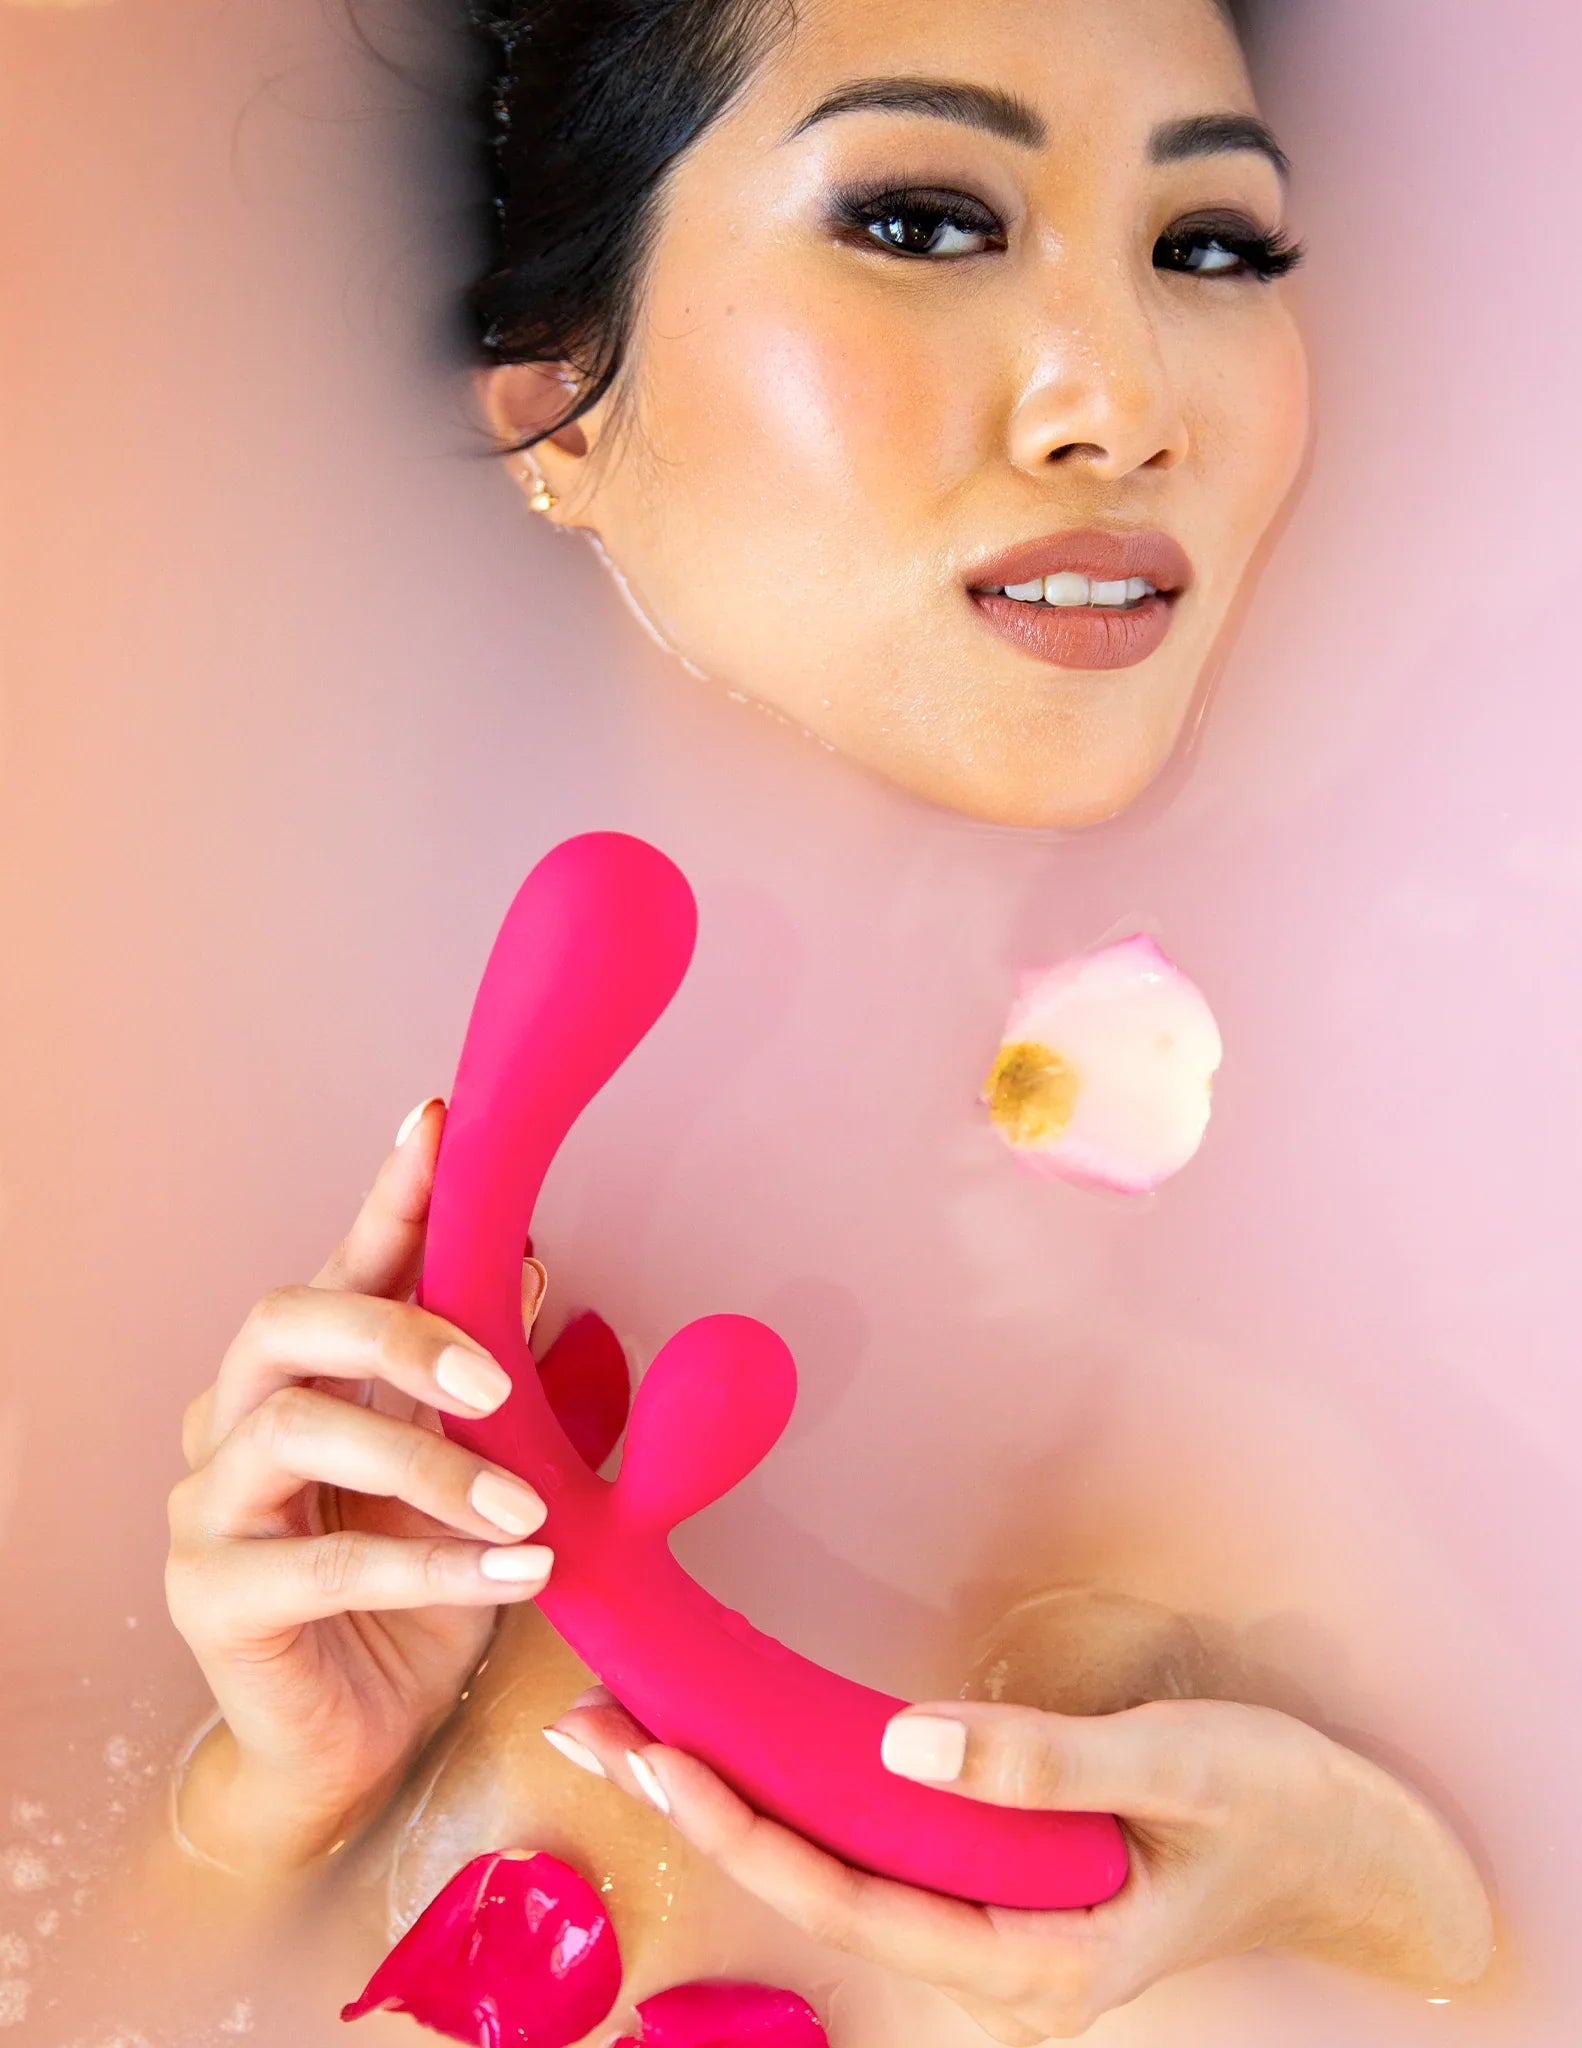 Asian woman model holding the Rabbit Vibrator Pink Color Reflexx 3 